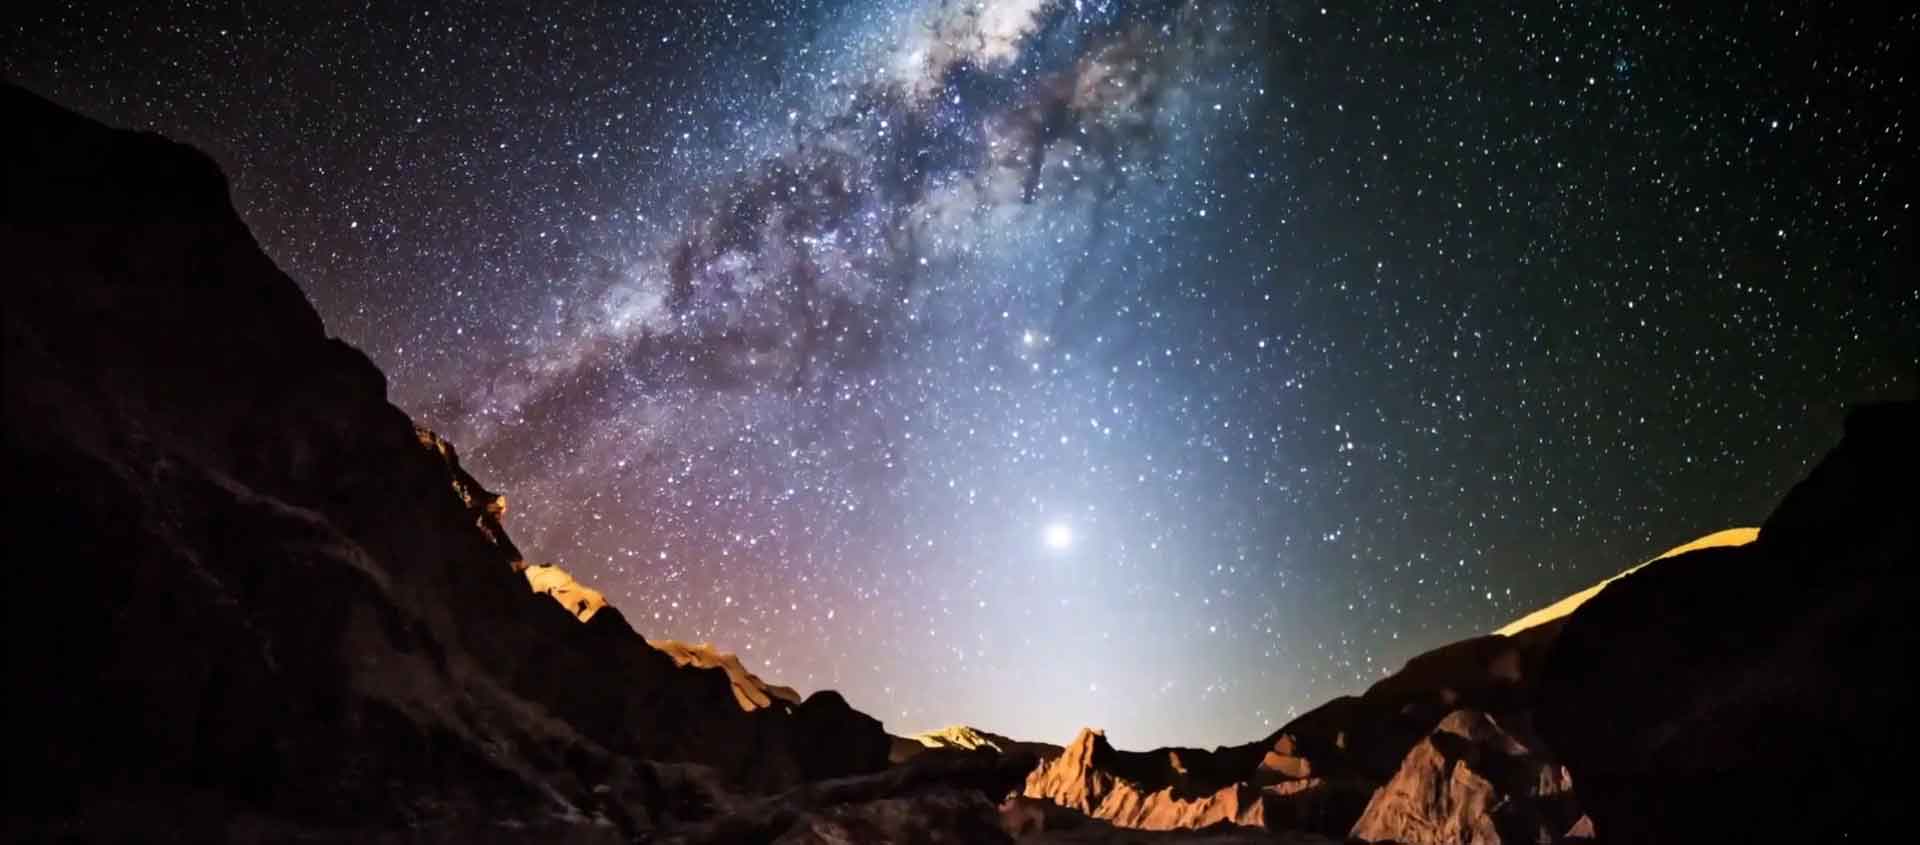 Costa Rica to Chile cruise image showing night sky over the Atacama Desert